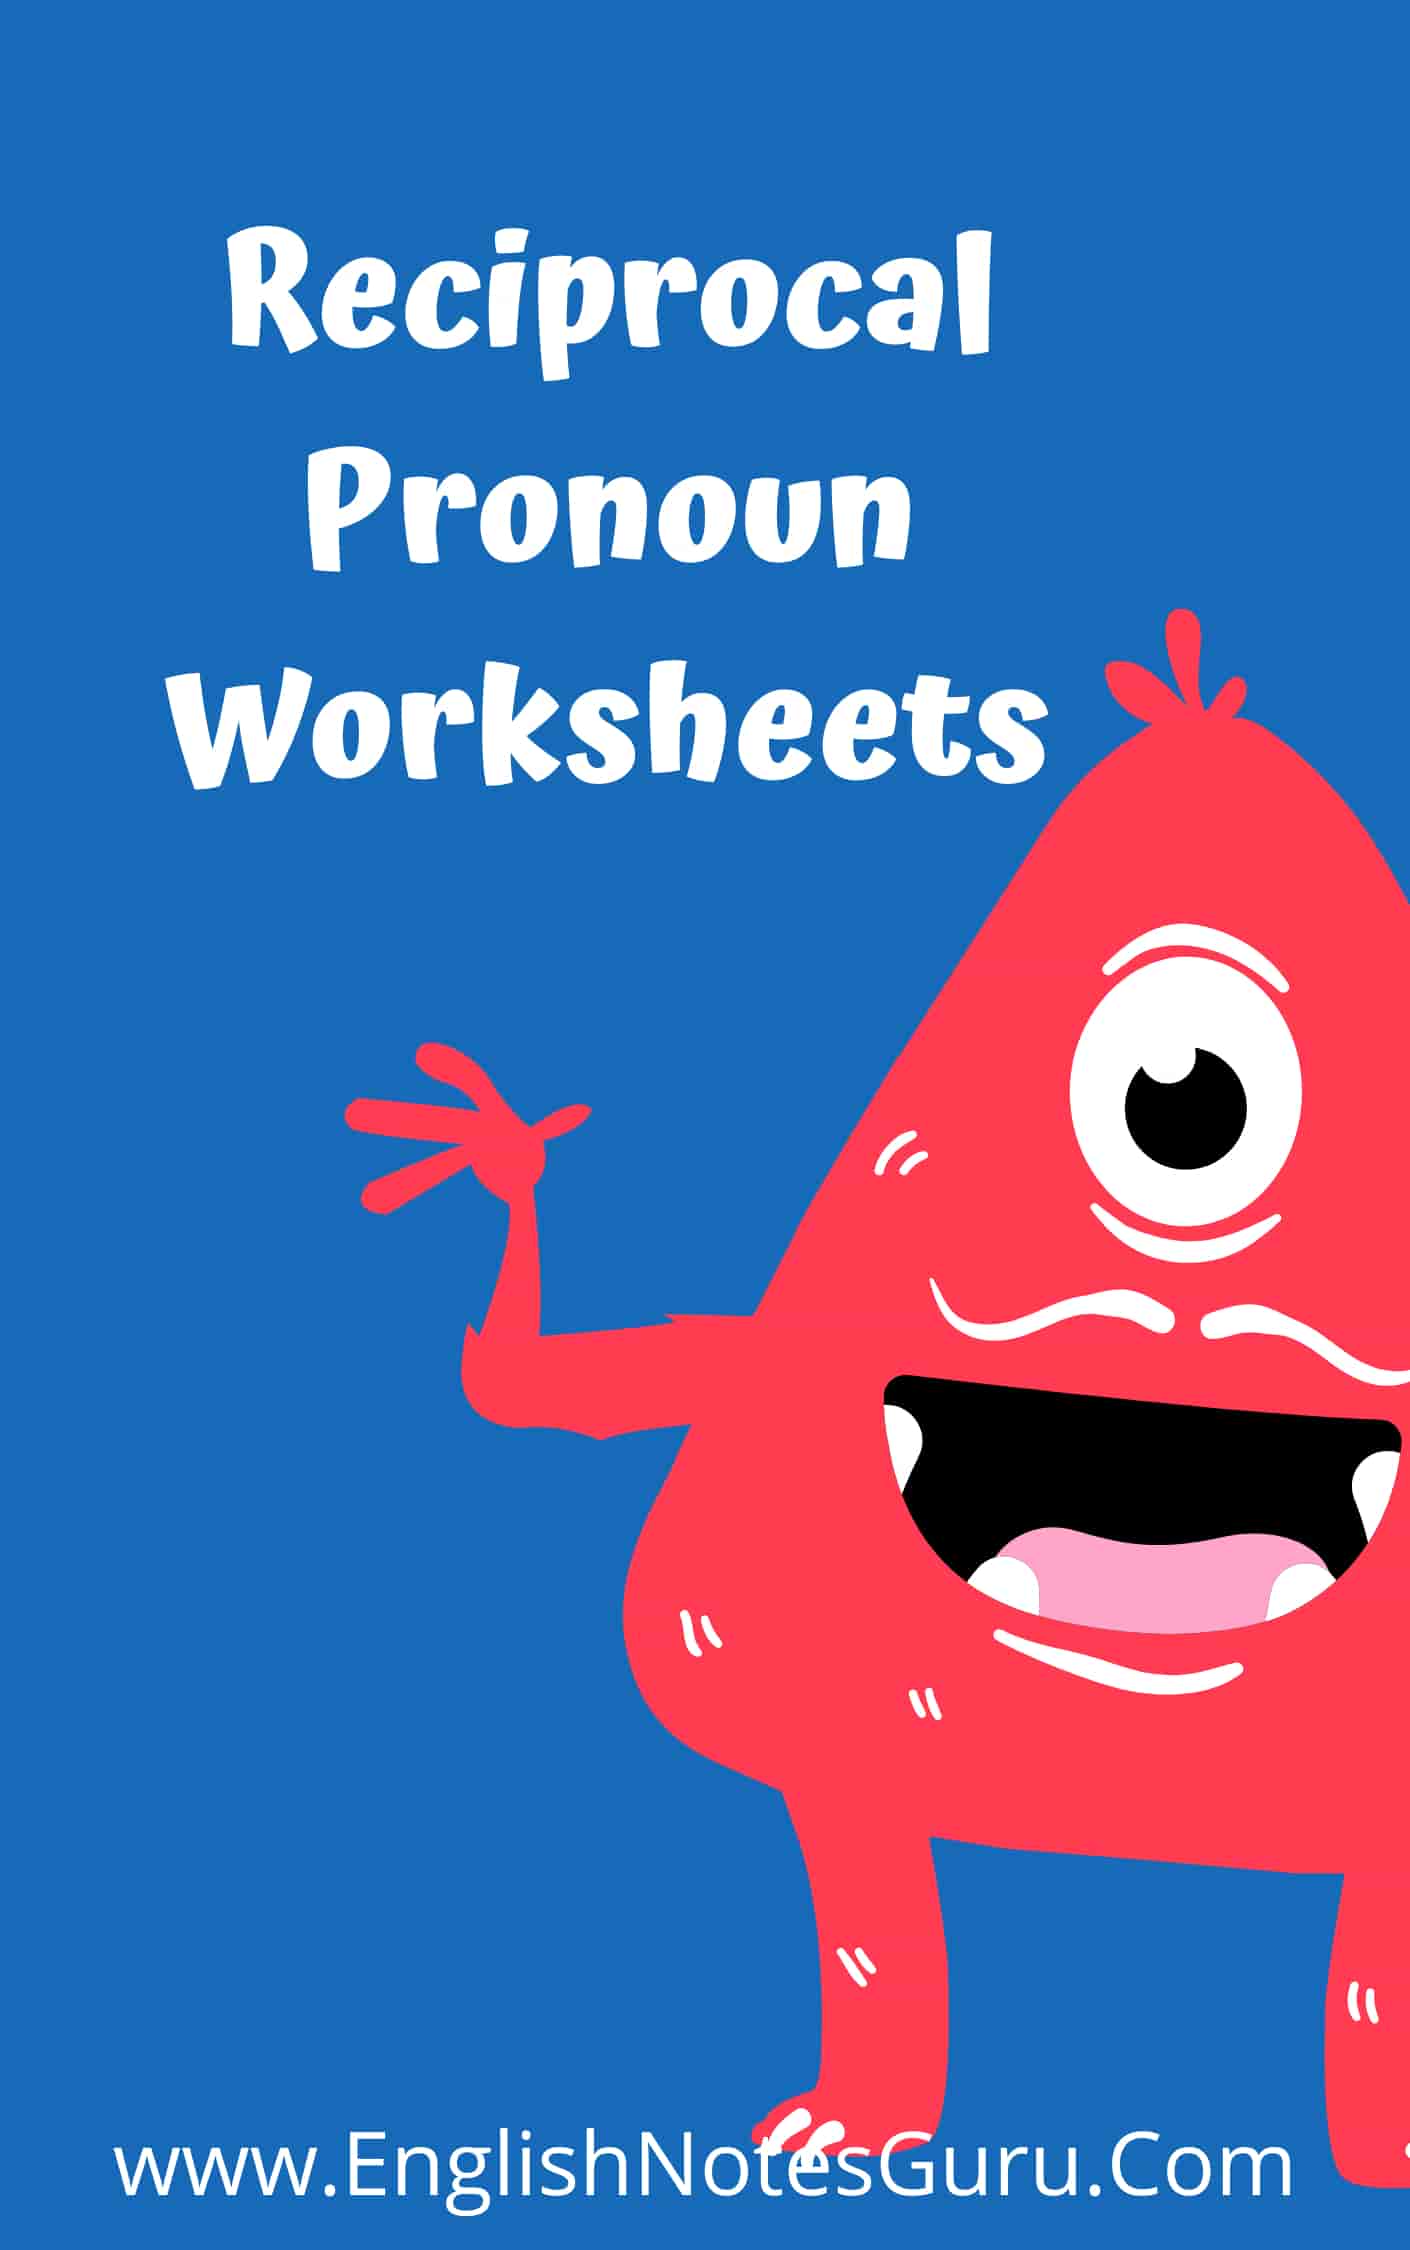 reciprocal-pronoun-worksheets-english-notes-guru